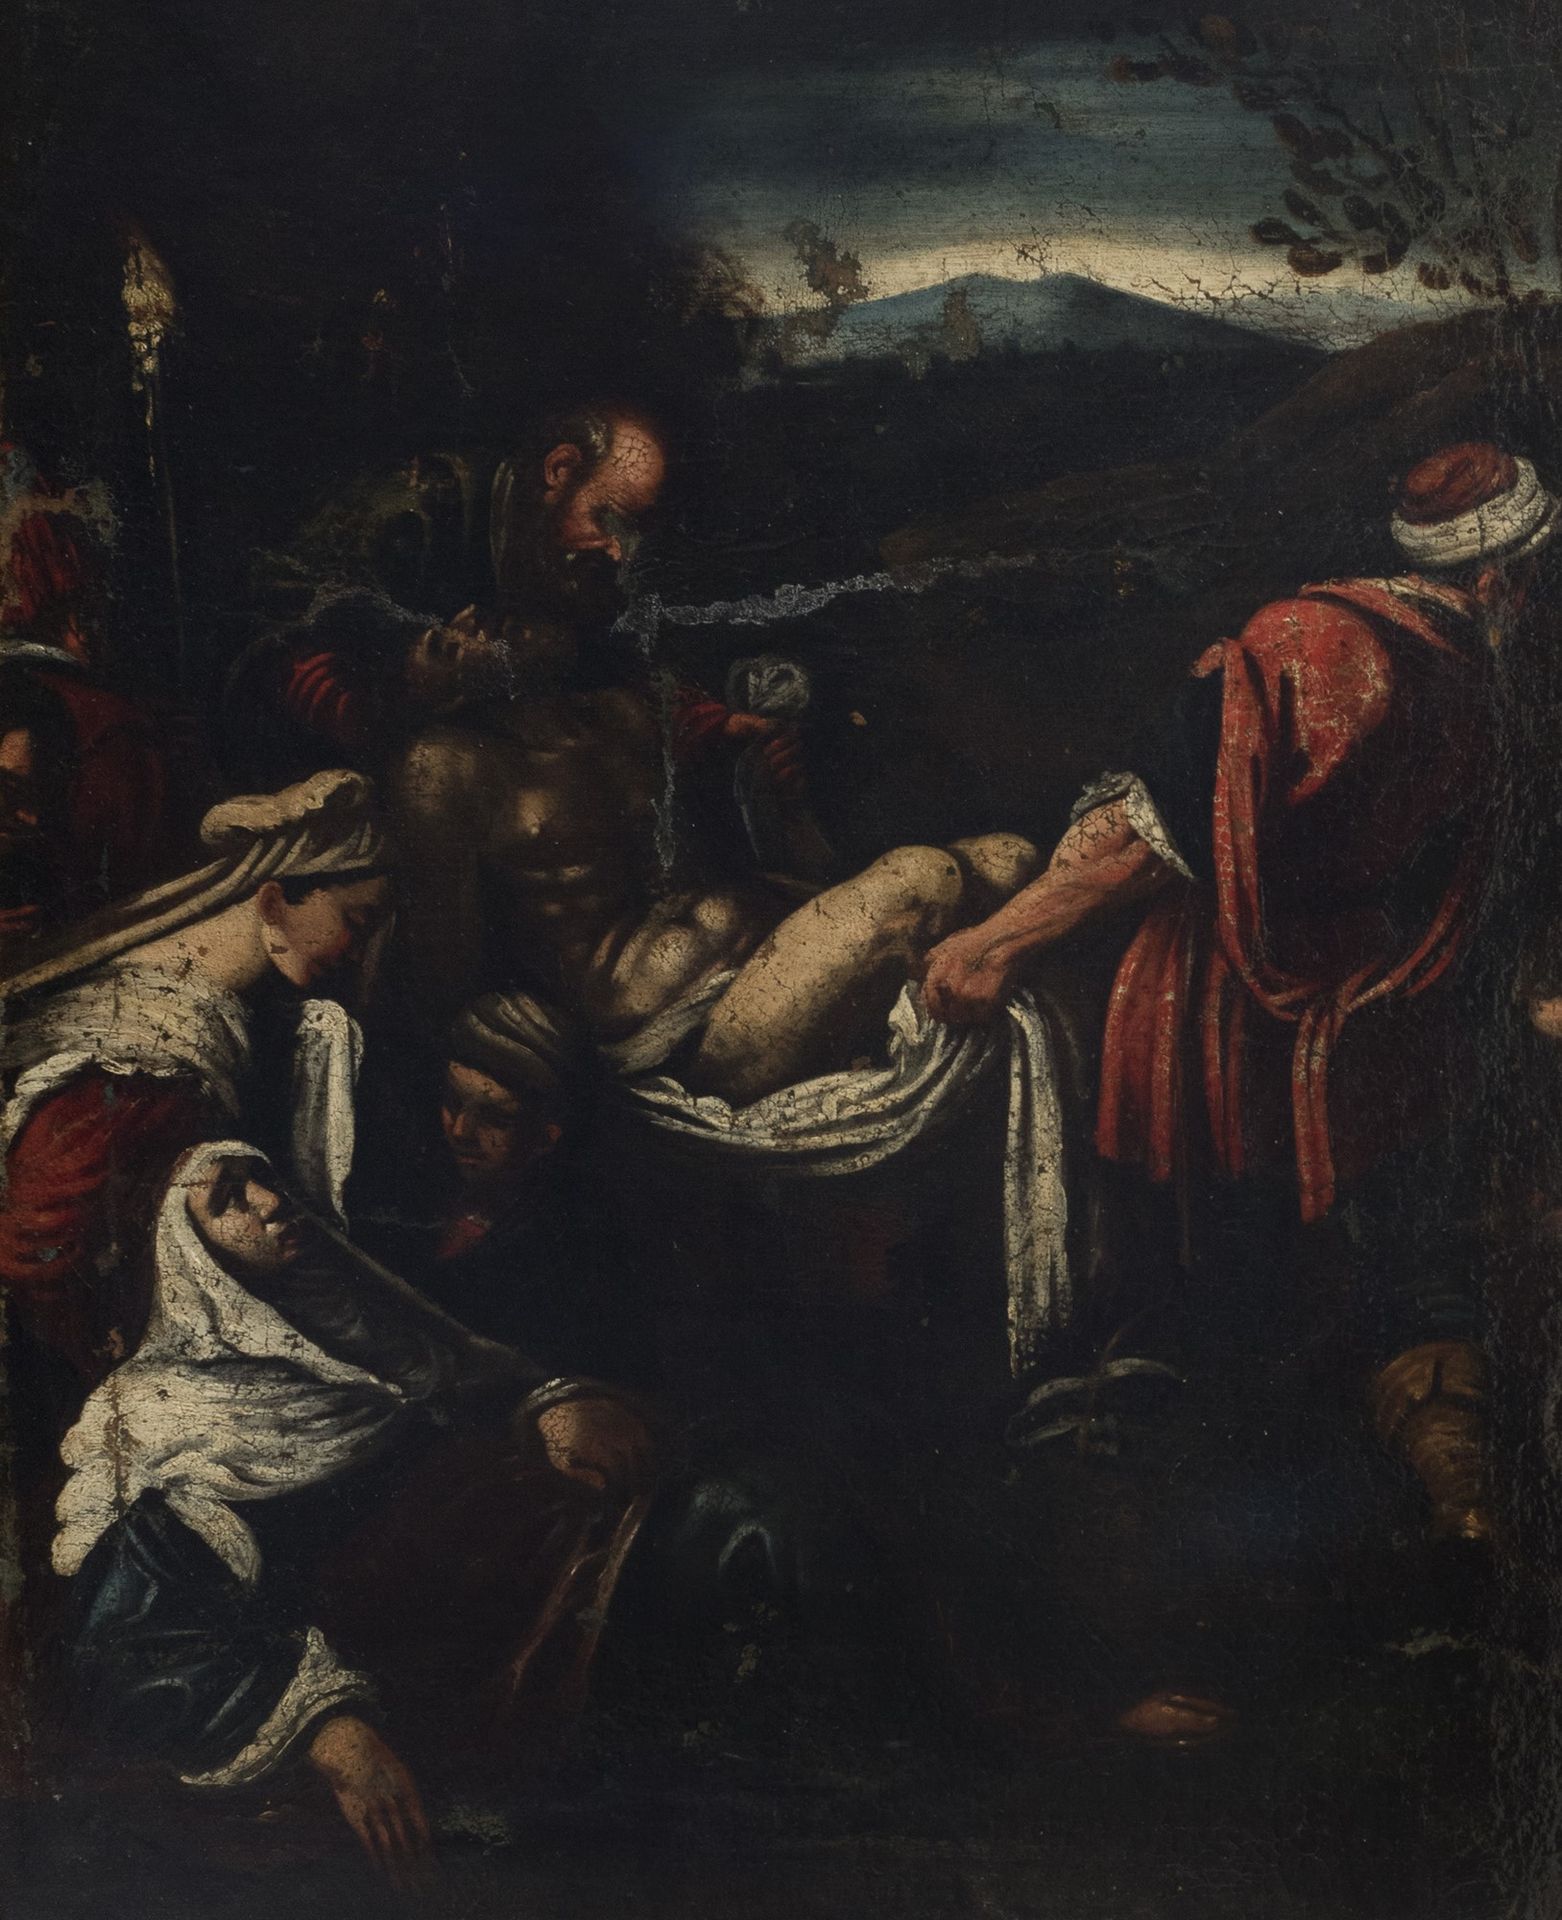 Seguace di Jacopo Bassano 雅克波-巴萨诺的追随者--基督的沉积

布面油画
79 x 63.5 cm